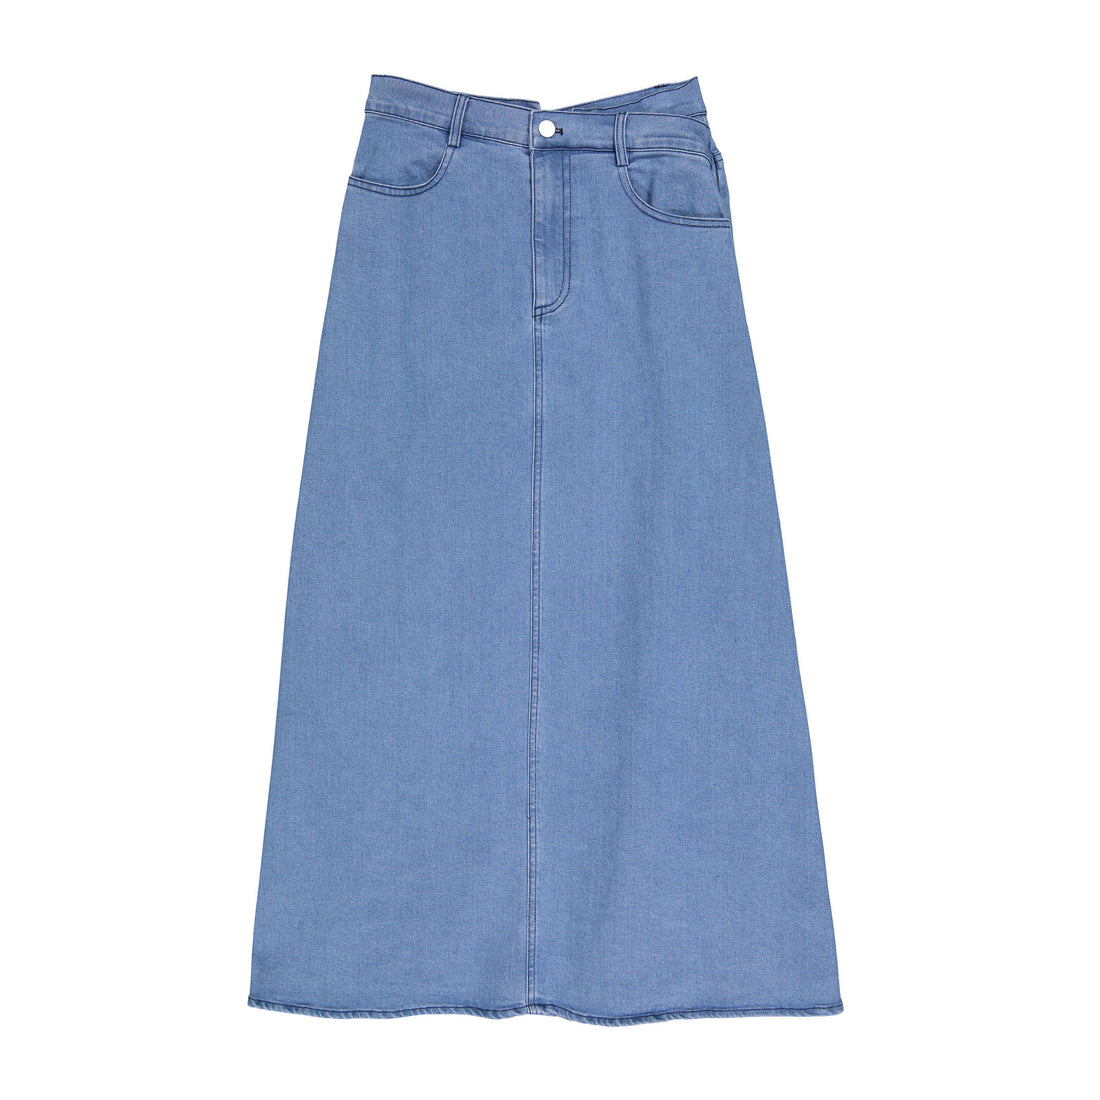 Ava Jeans Light Denim A line Zip Skirt